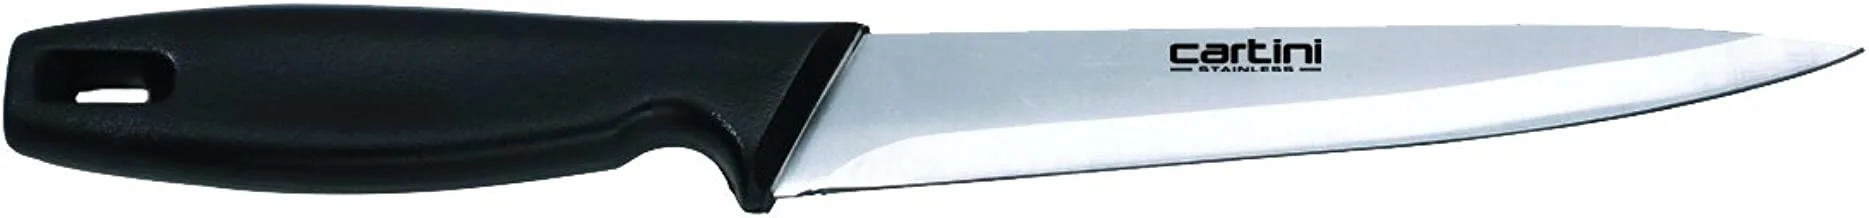 Godrej Cartini Fine Dicing Knife, Stainless Steel, 27.6cm-Black